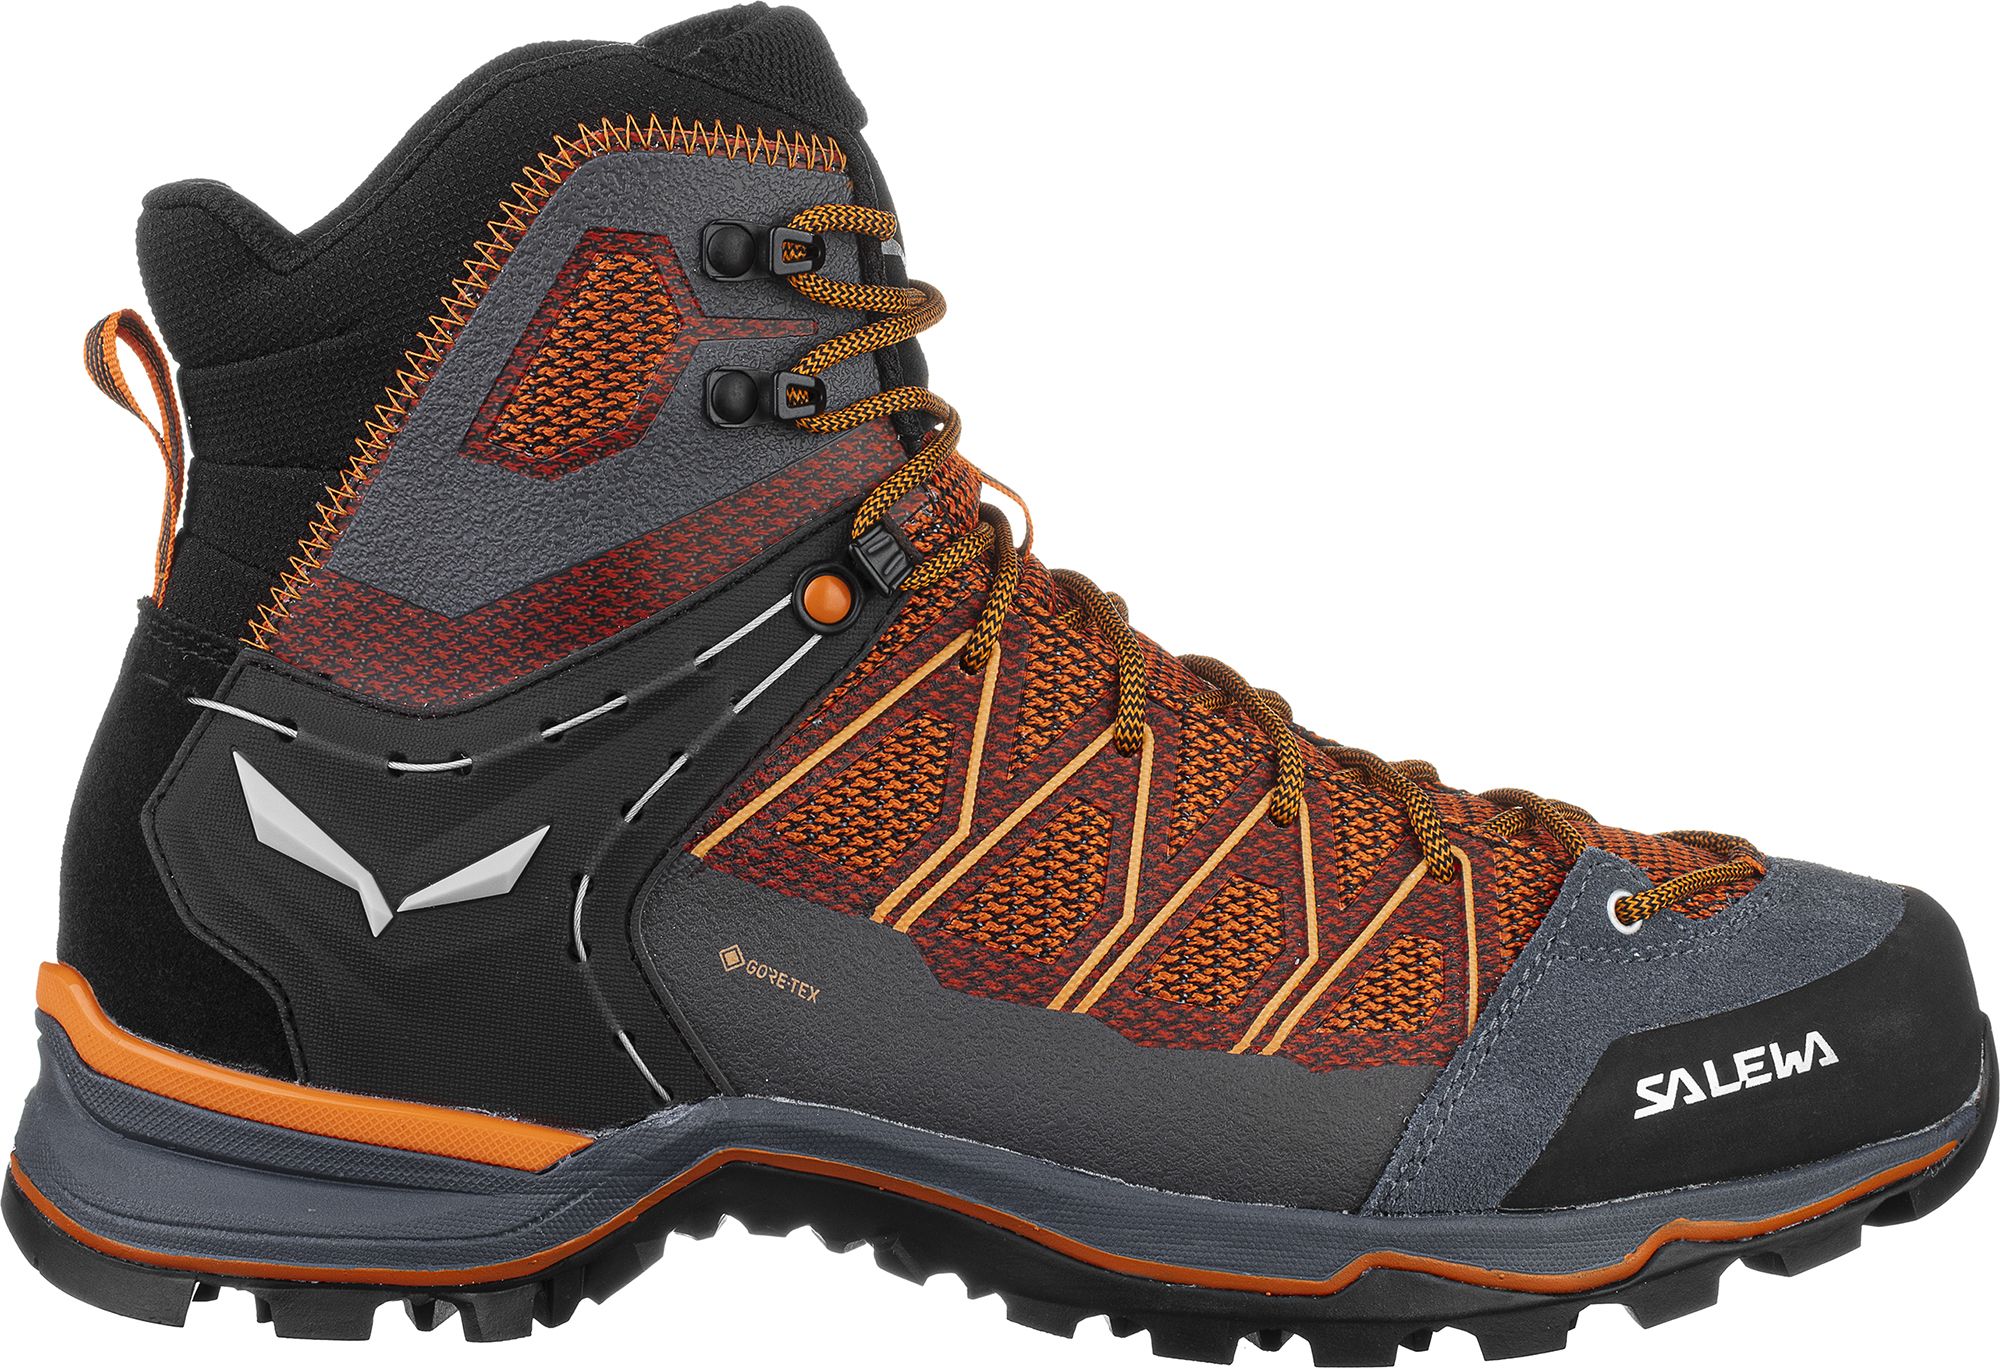 Photos - Trekking Shoes Salewa Men's Mountain Trainer Lite Mid GORE-TEX Hiking Boots, Size 10.5, B 